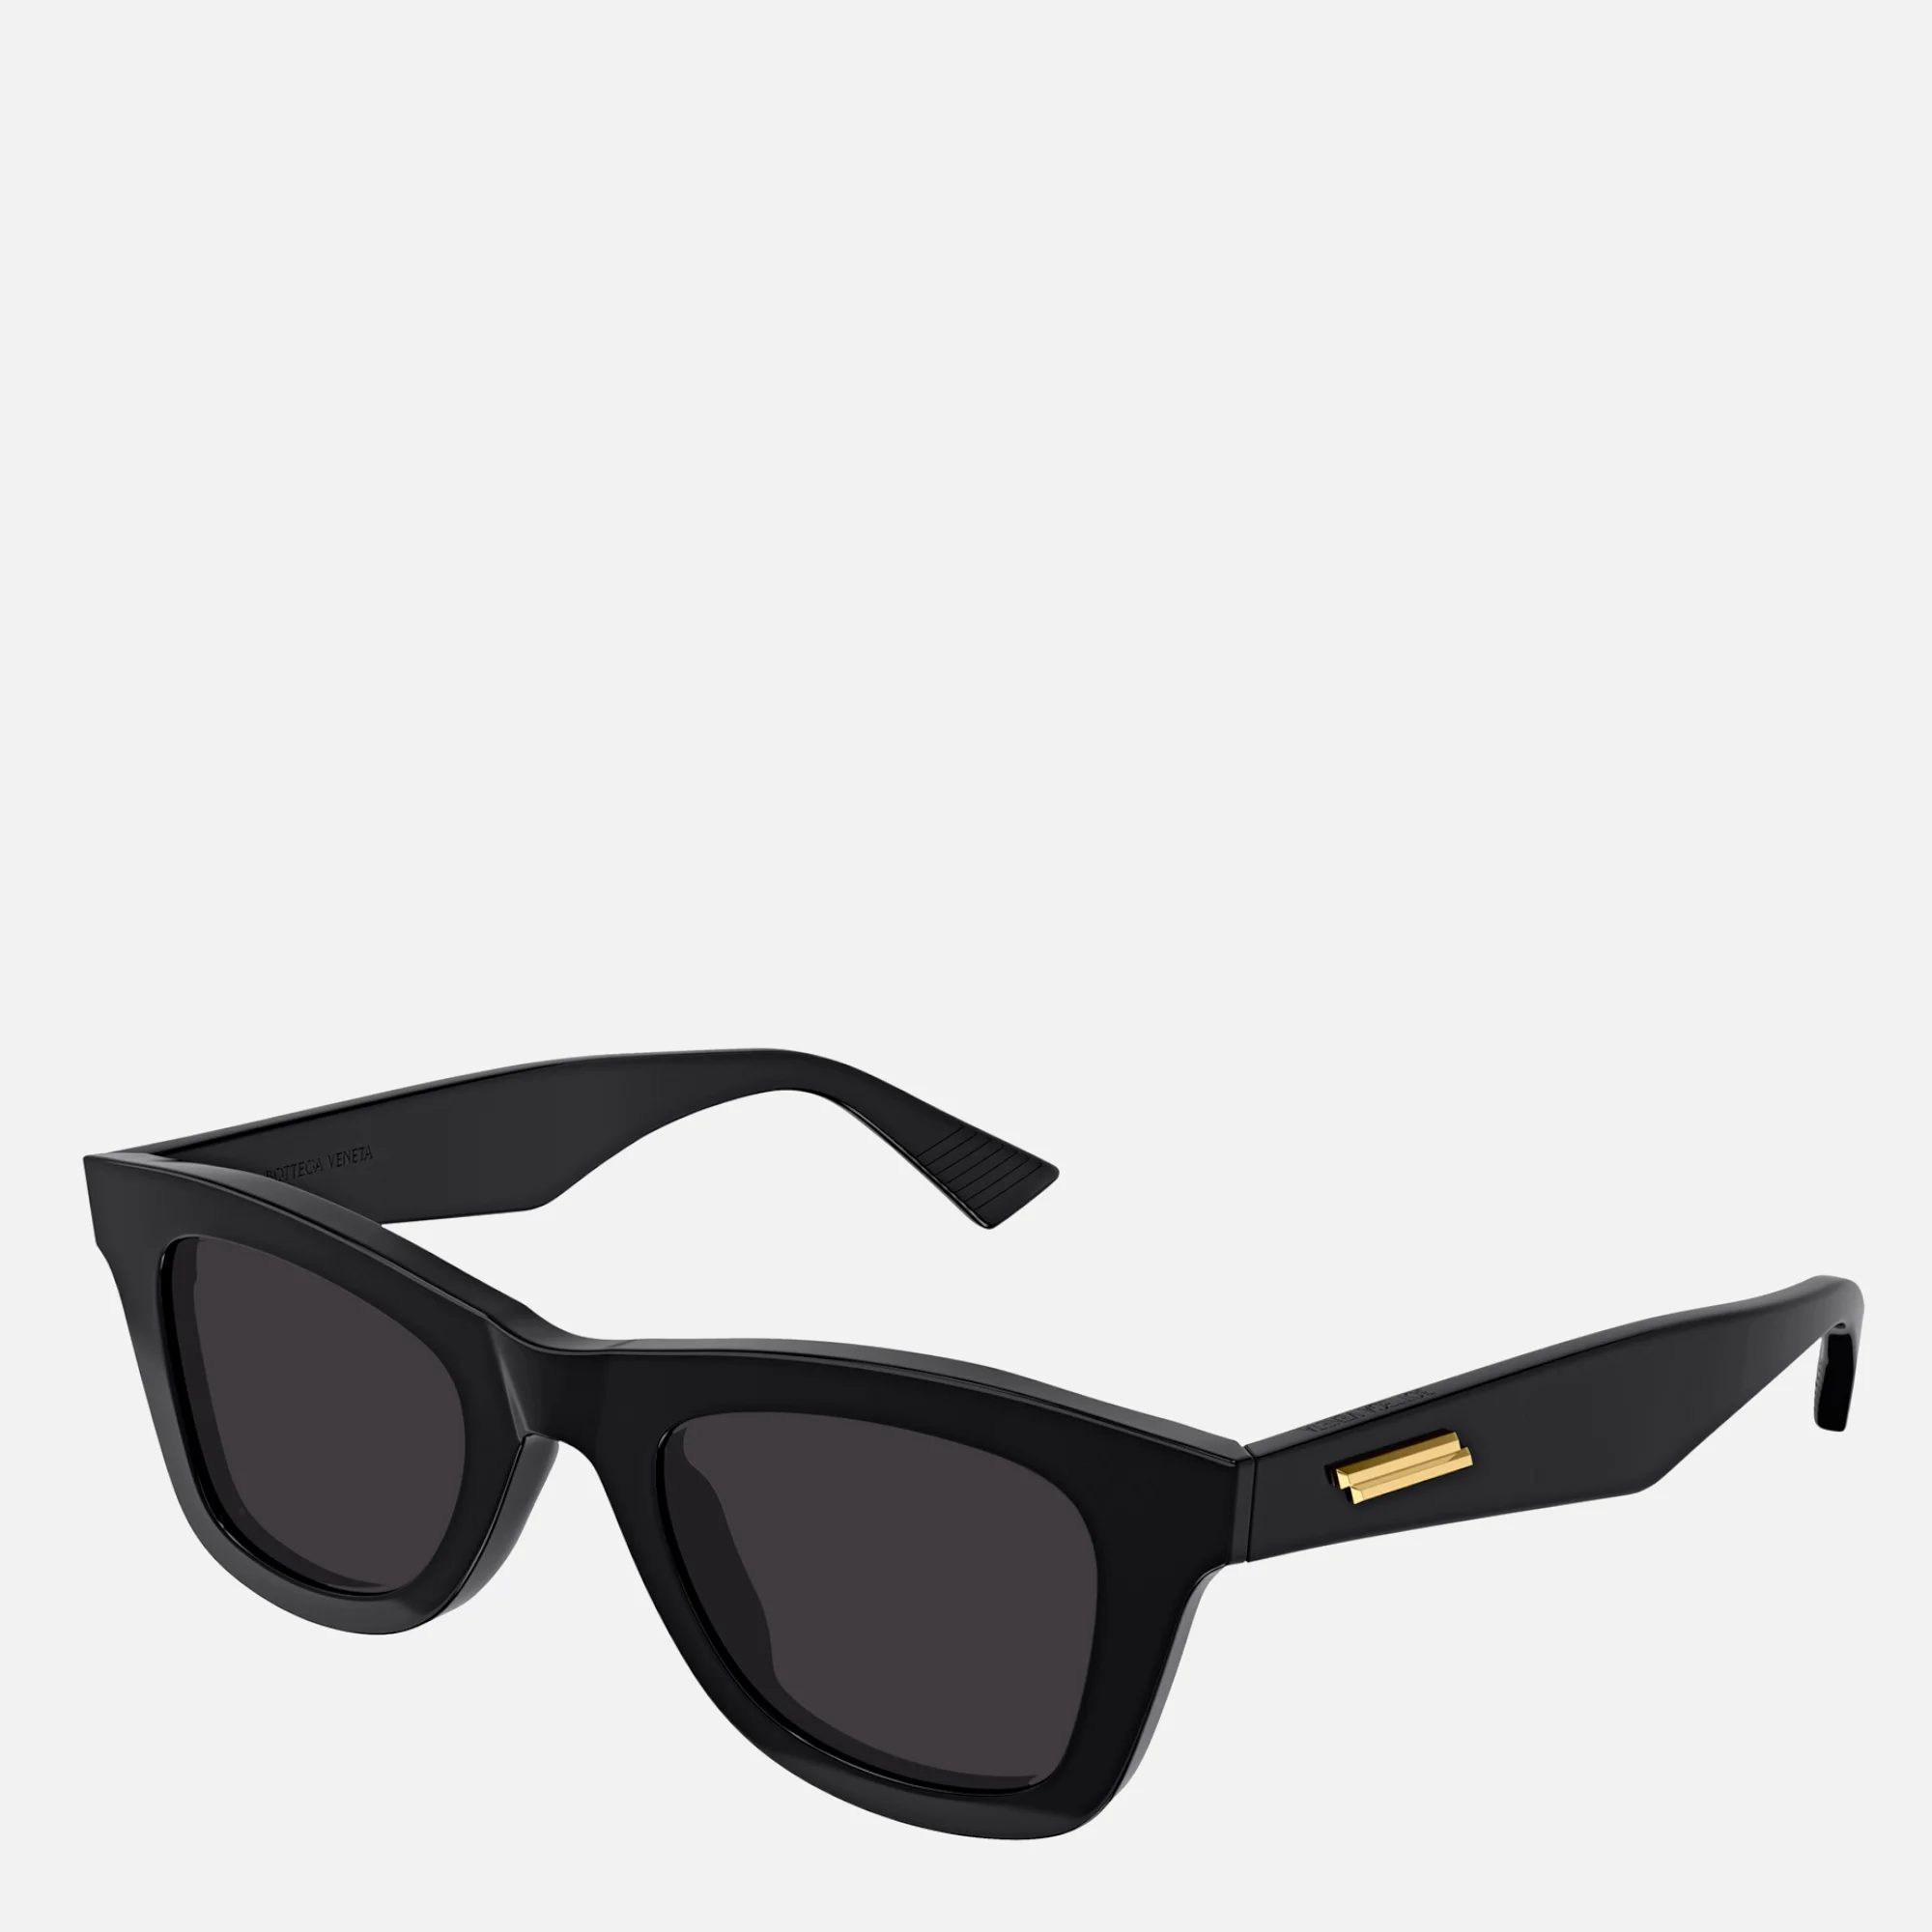 Bottega Veneta Women's Square Frame Acetate Sunglasses - Black/Grey Image 1